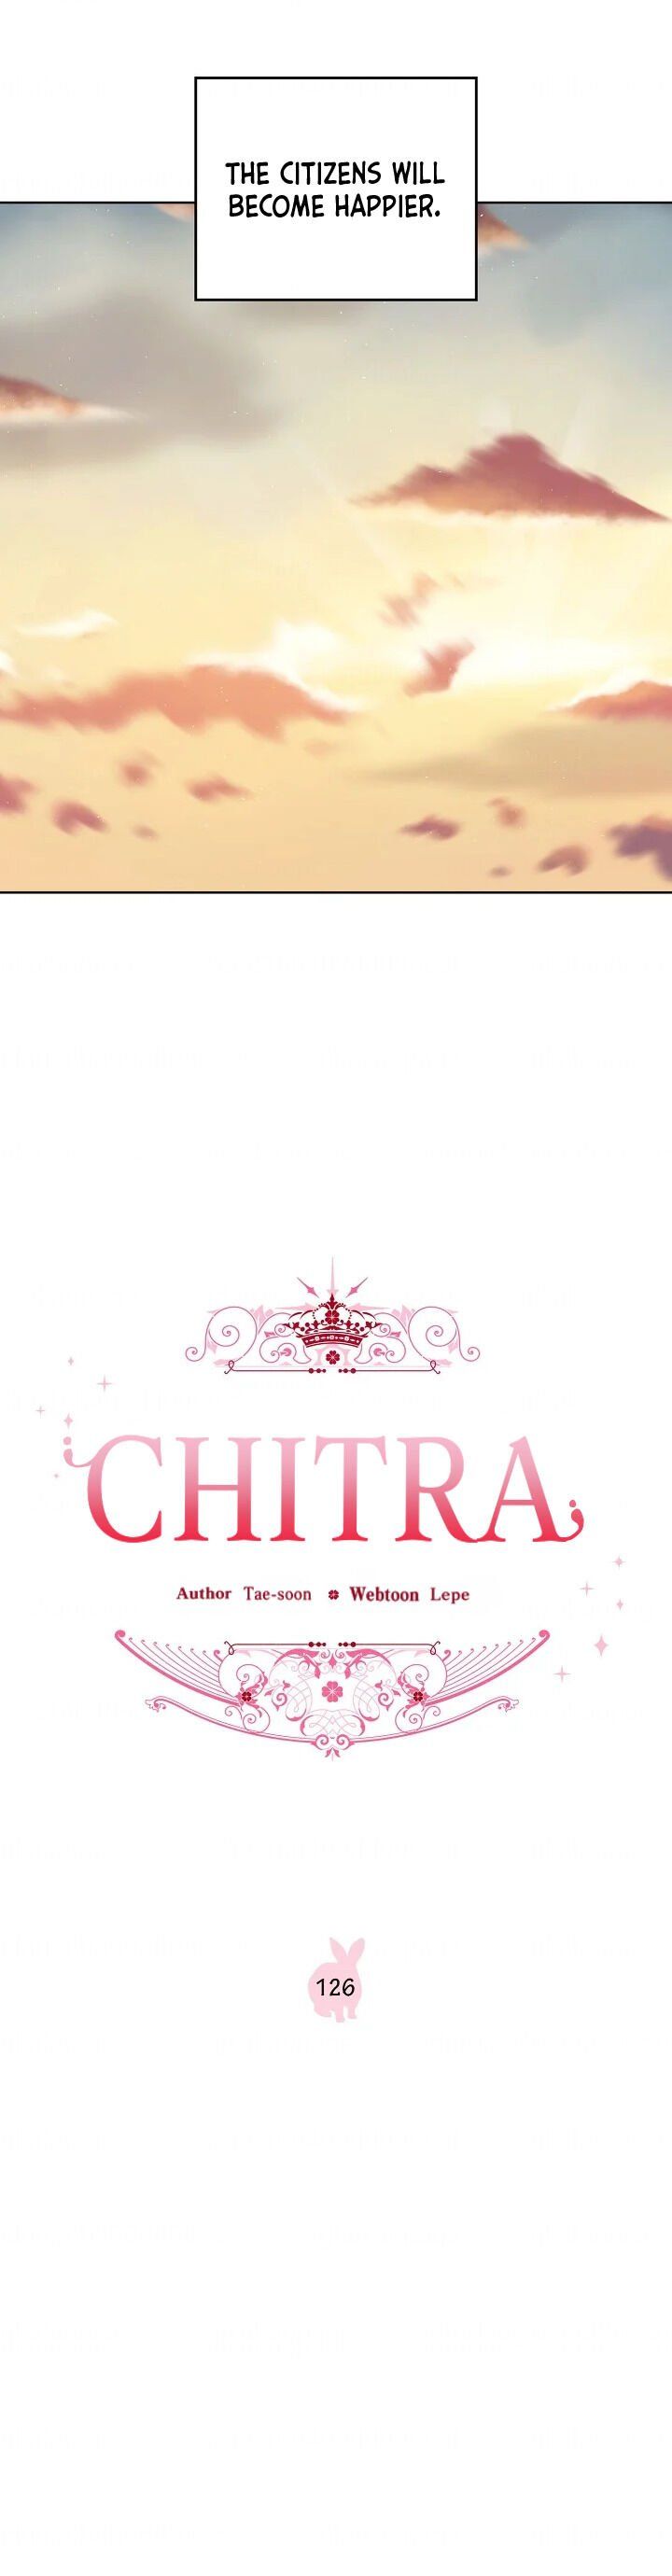 Chitra 126 7